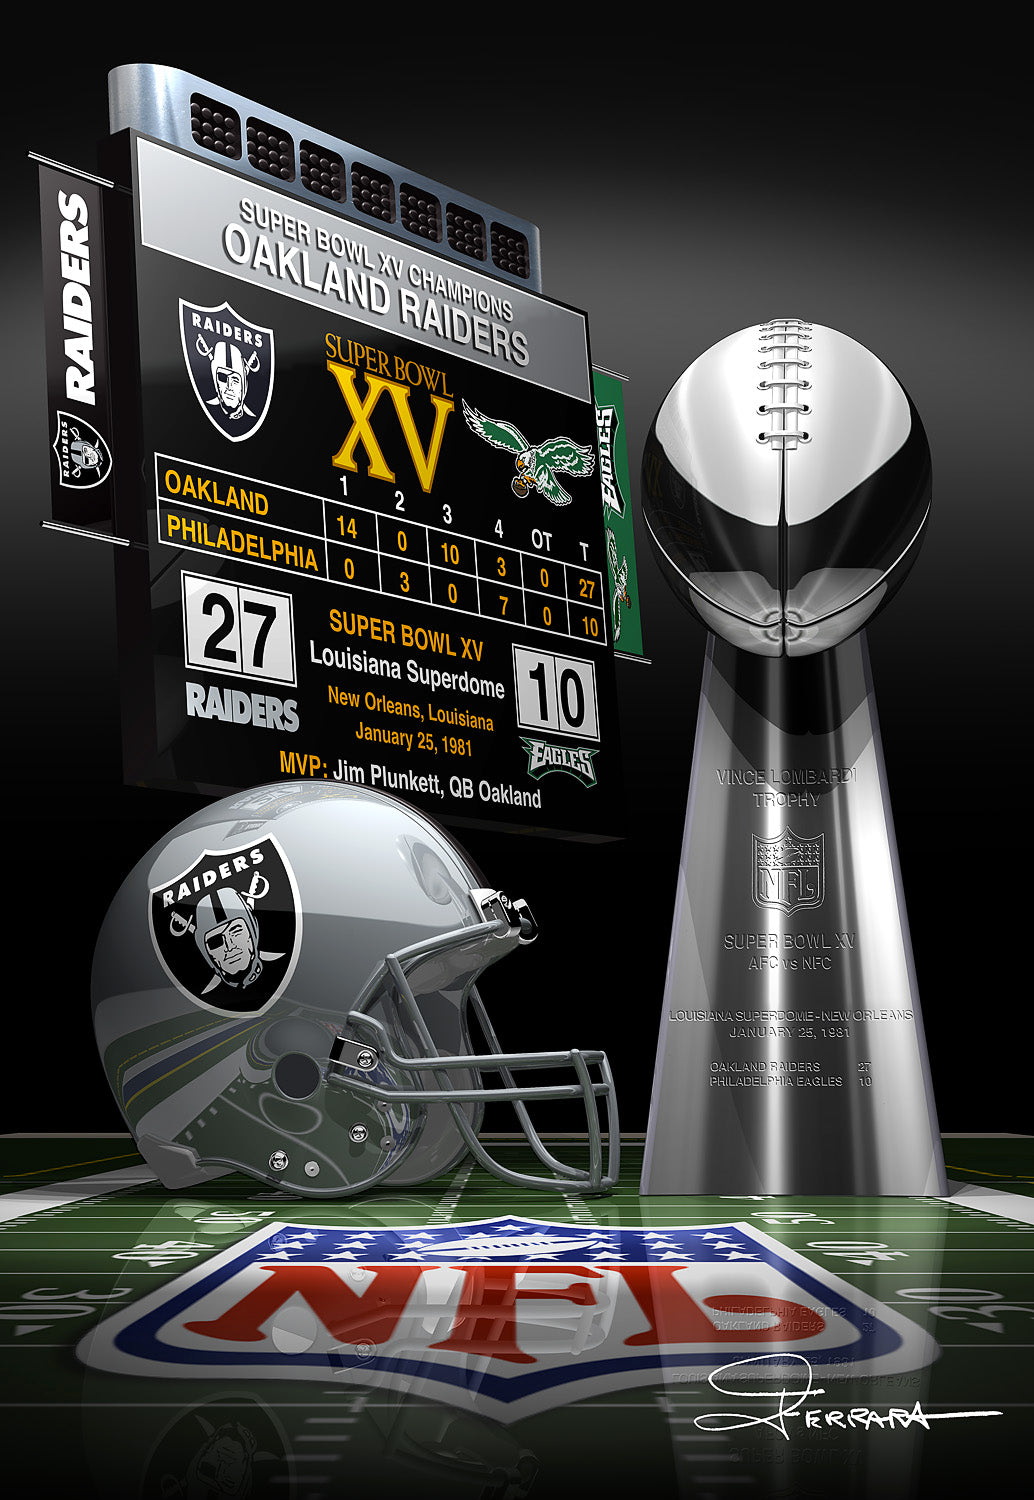 Oakland Raiders, Super Bowl XV Champions